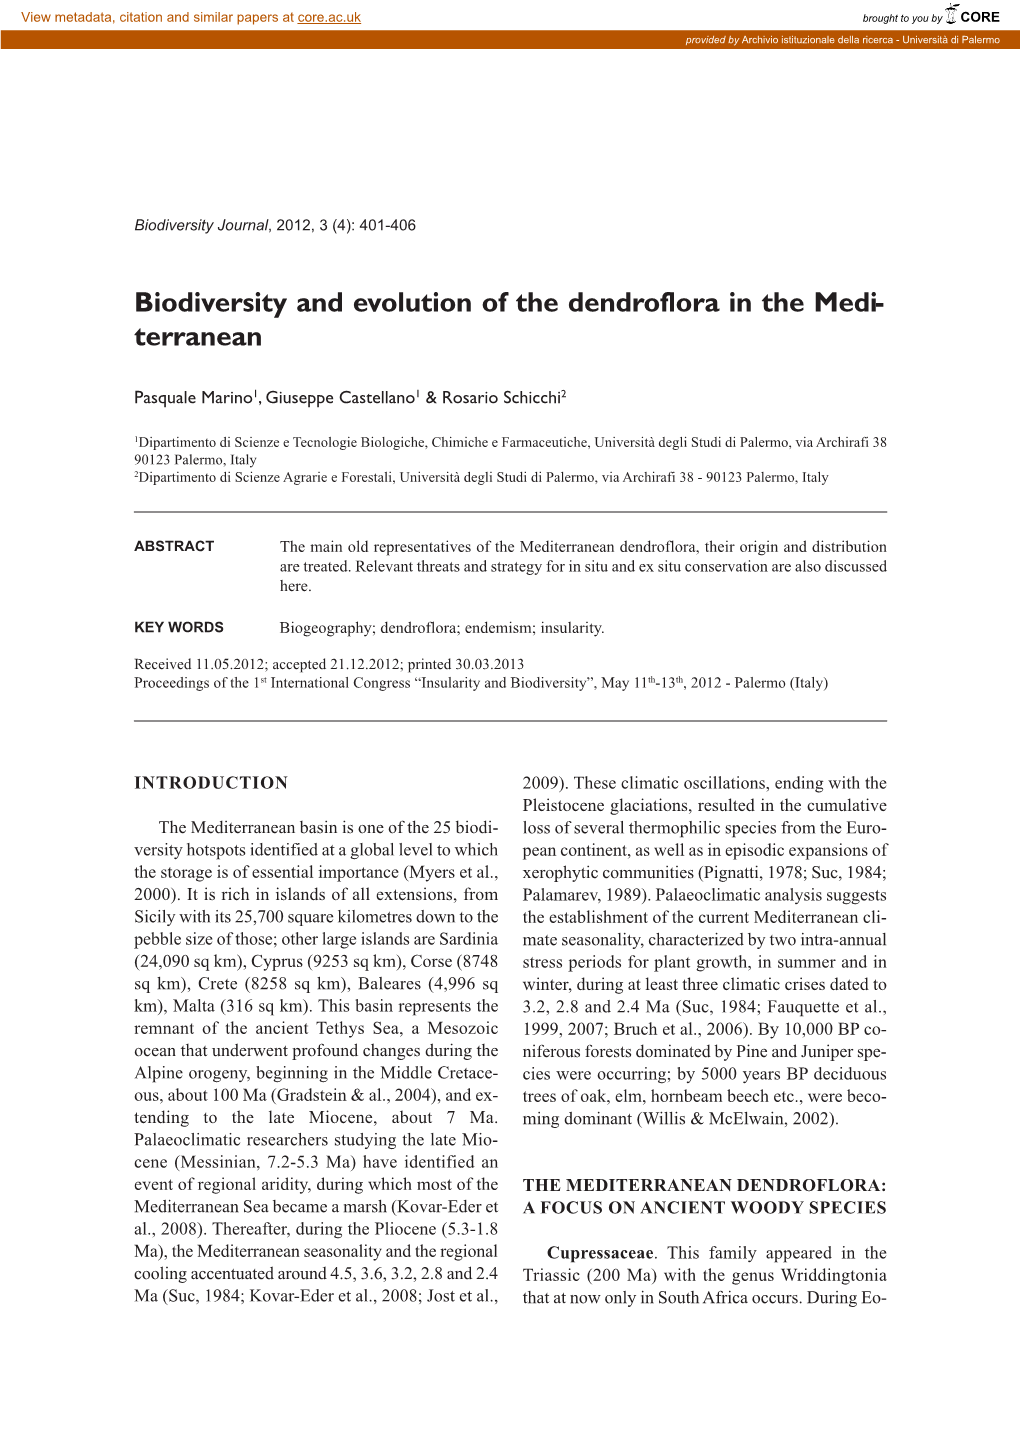 Biodiversity and Evolution of the Dendroflora in the Medi- Terranean